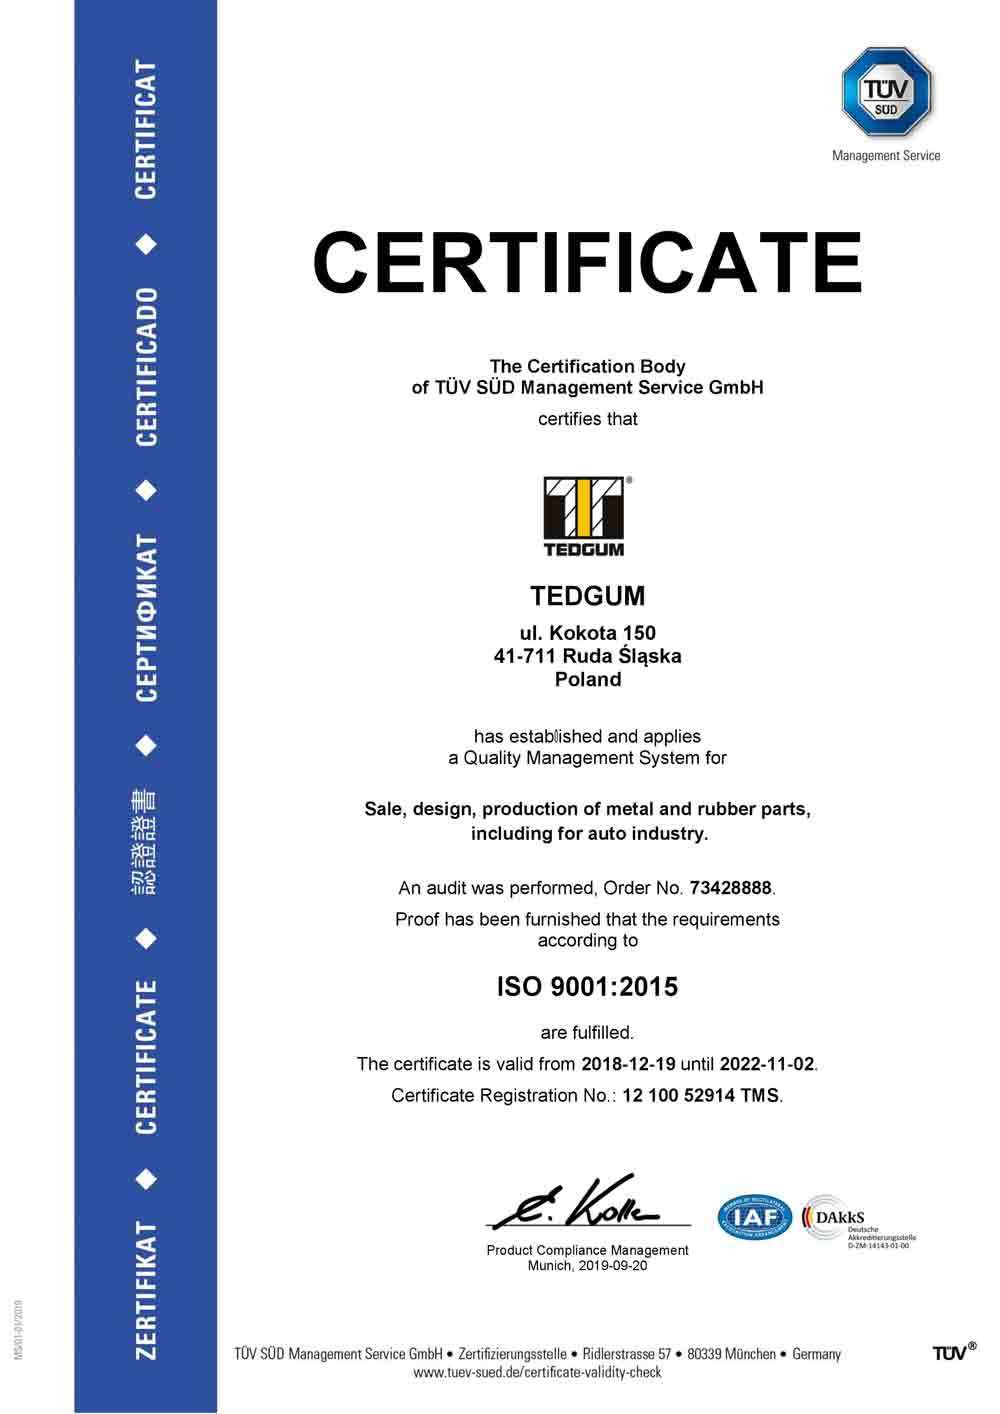 TEDGUM ISO 9001:2015 certificate